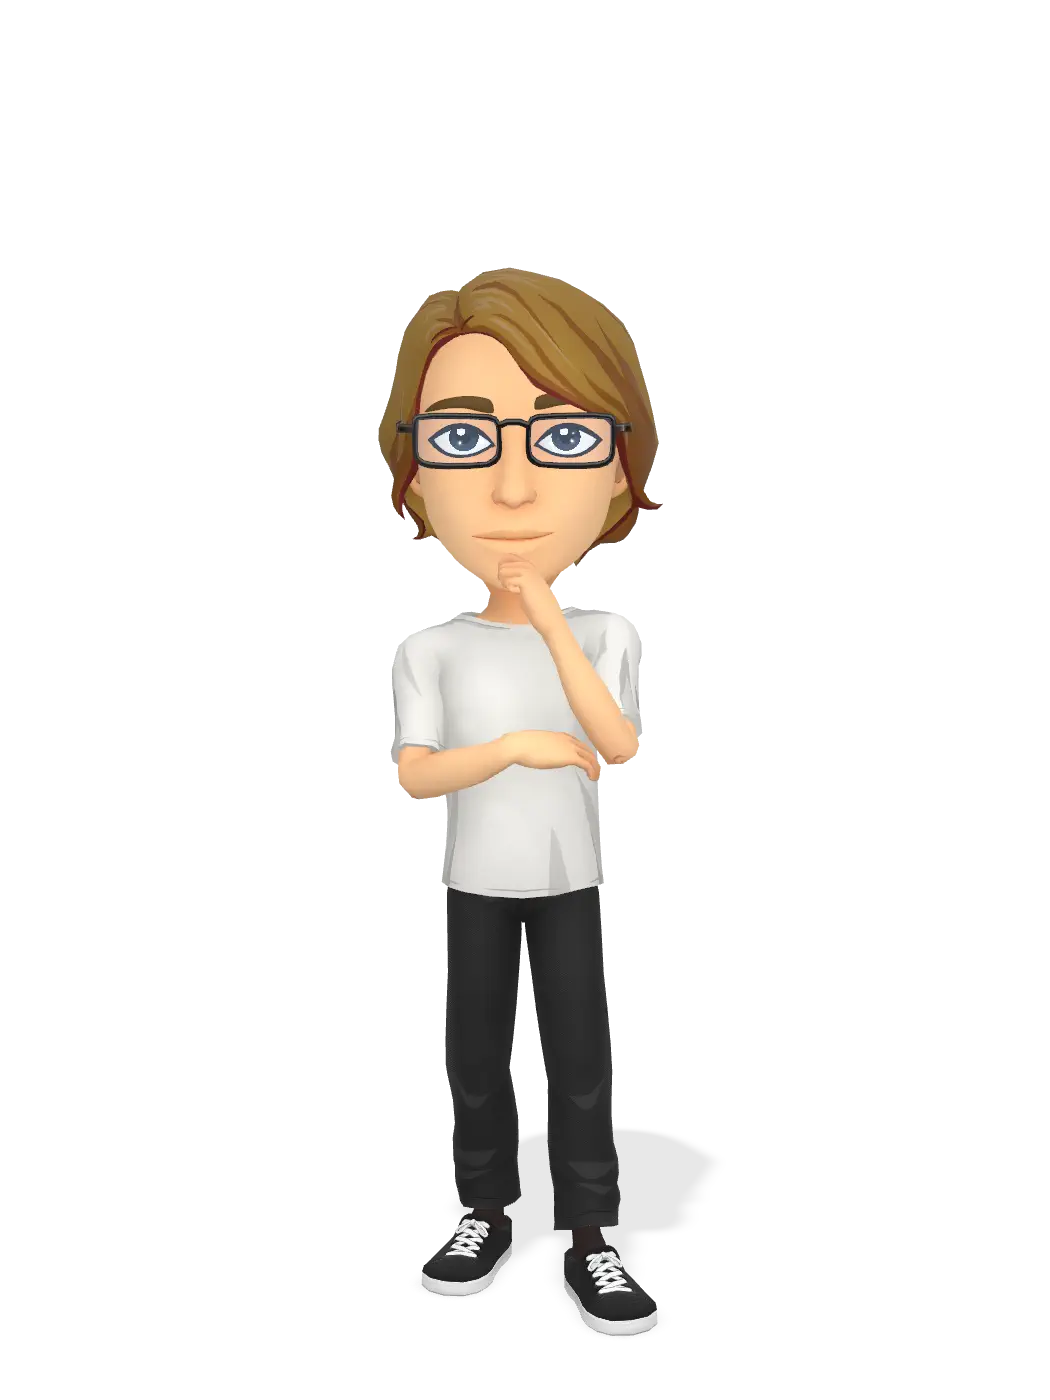 3D Bitmoji for lukethemighty1 avatar